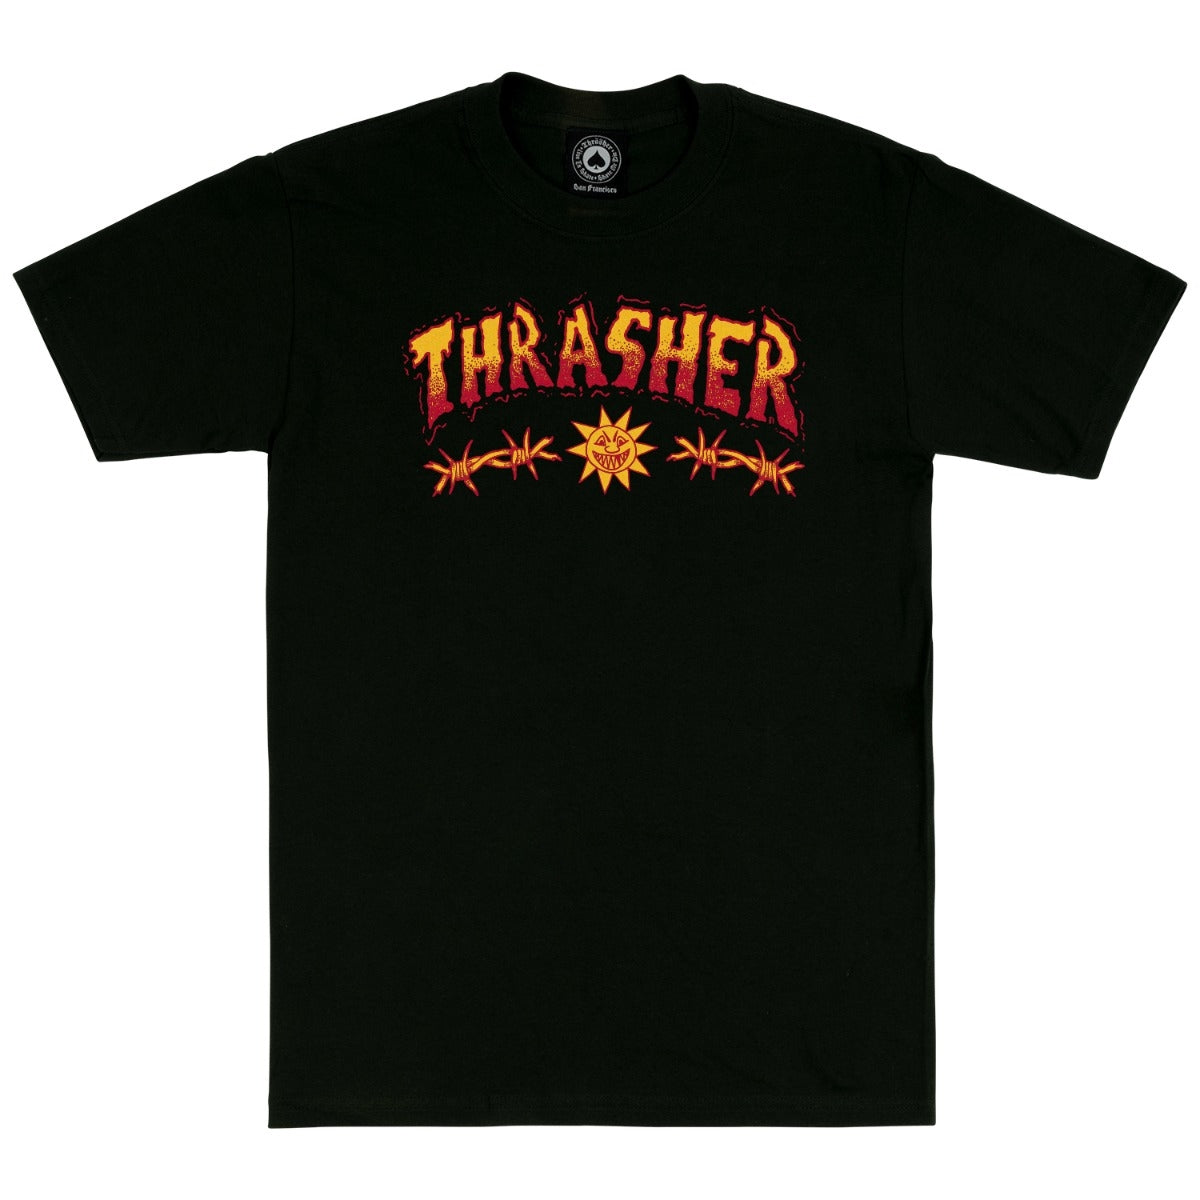 THRASHER - SKETCH TEE - BLACK